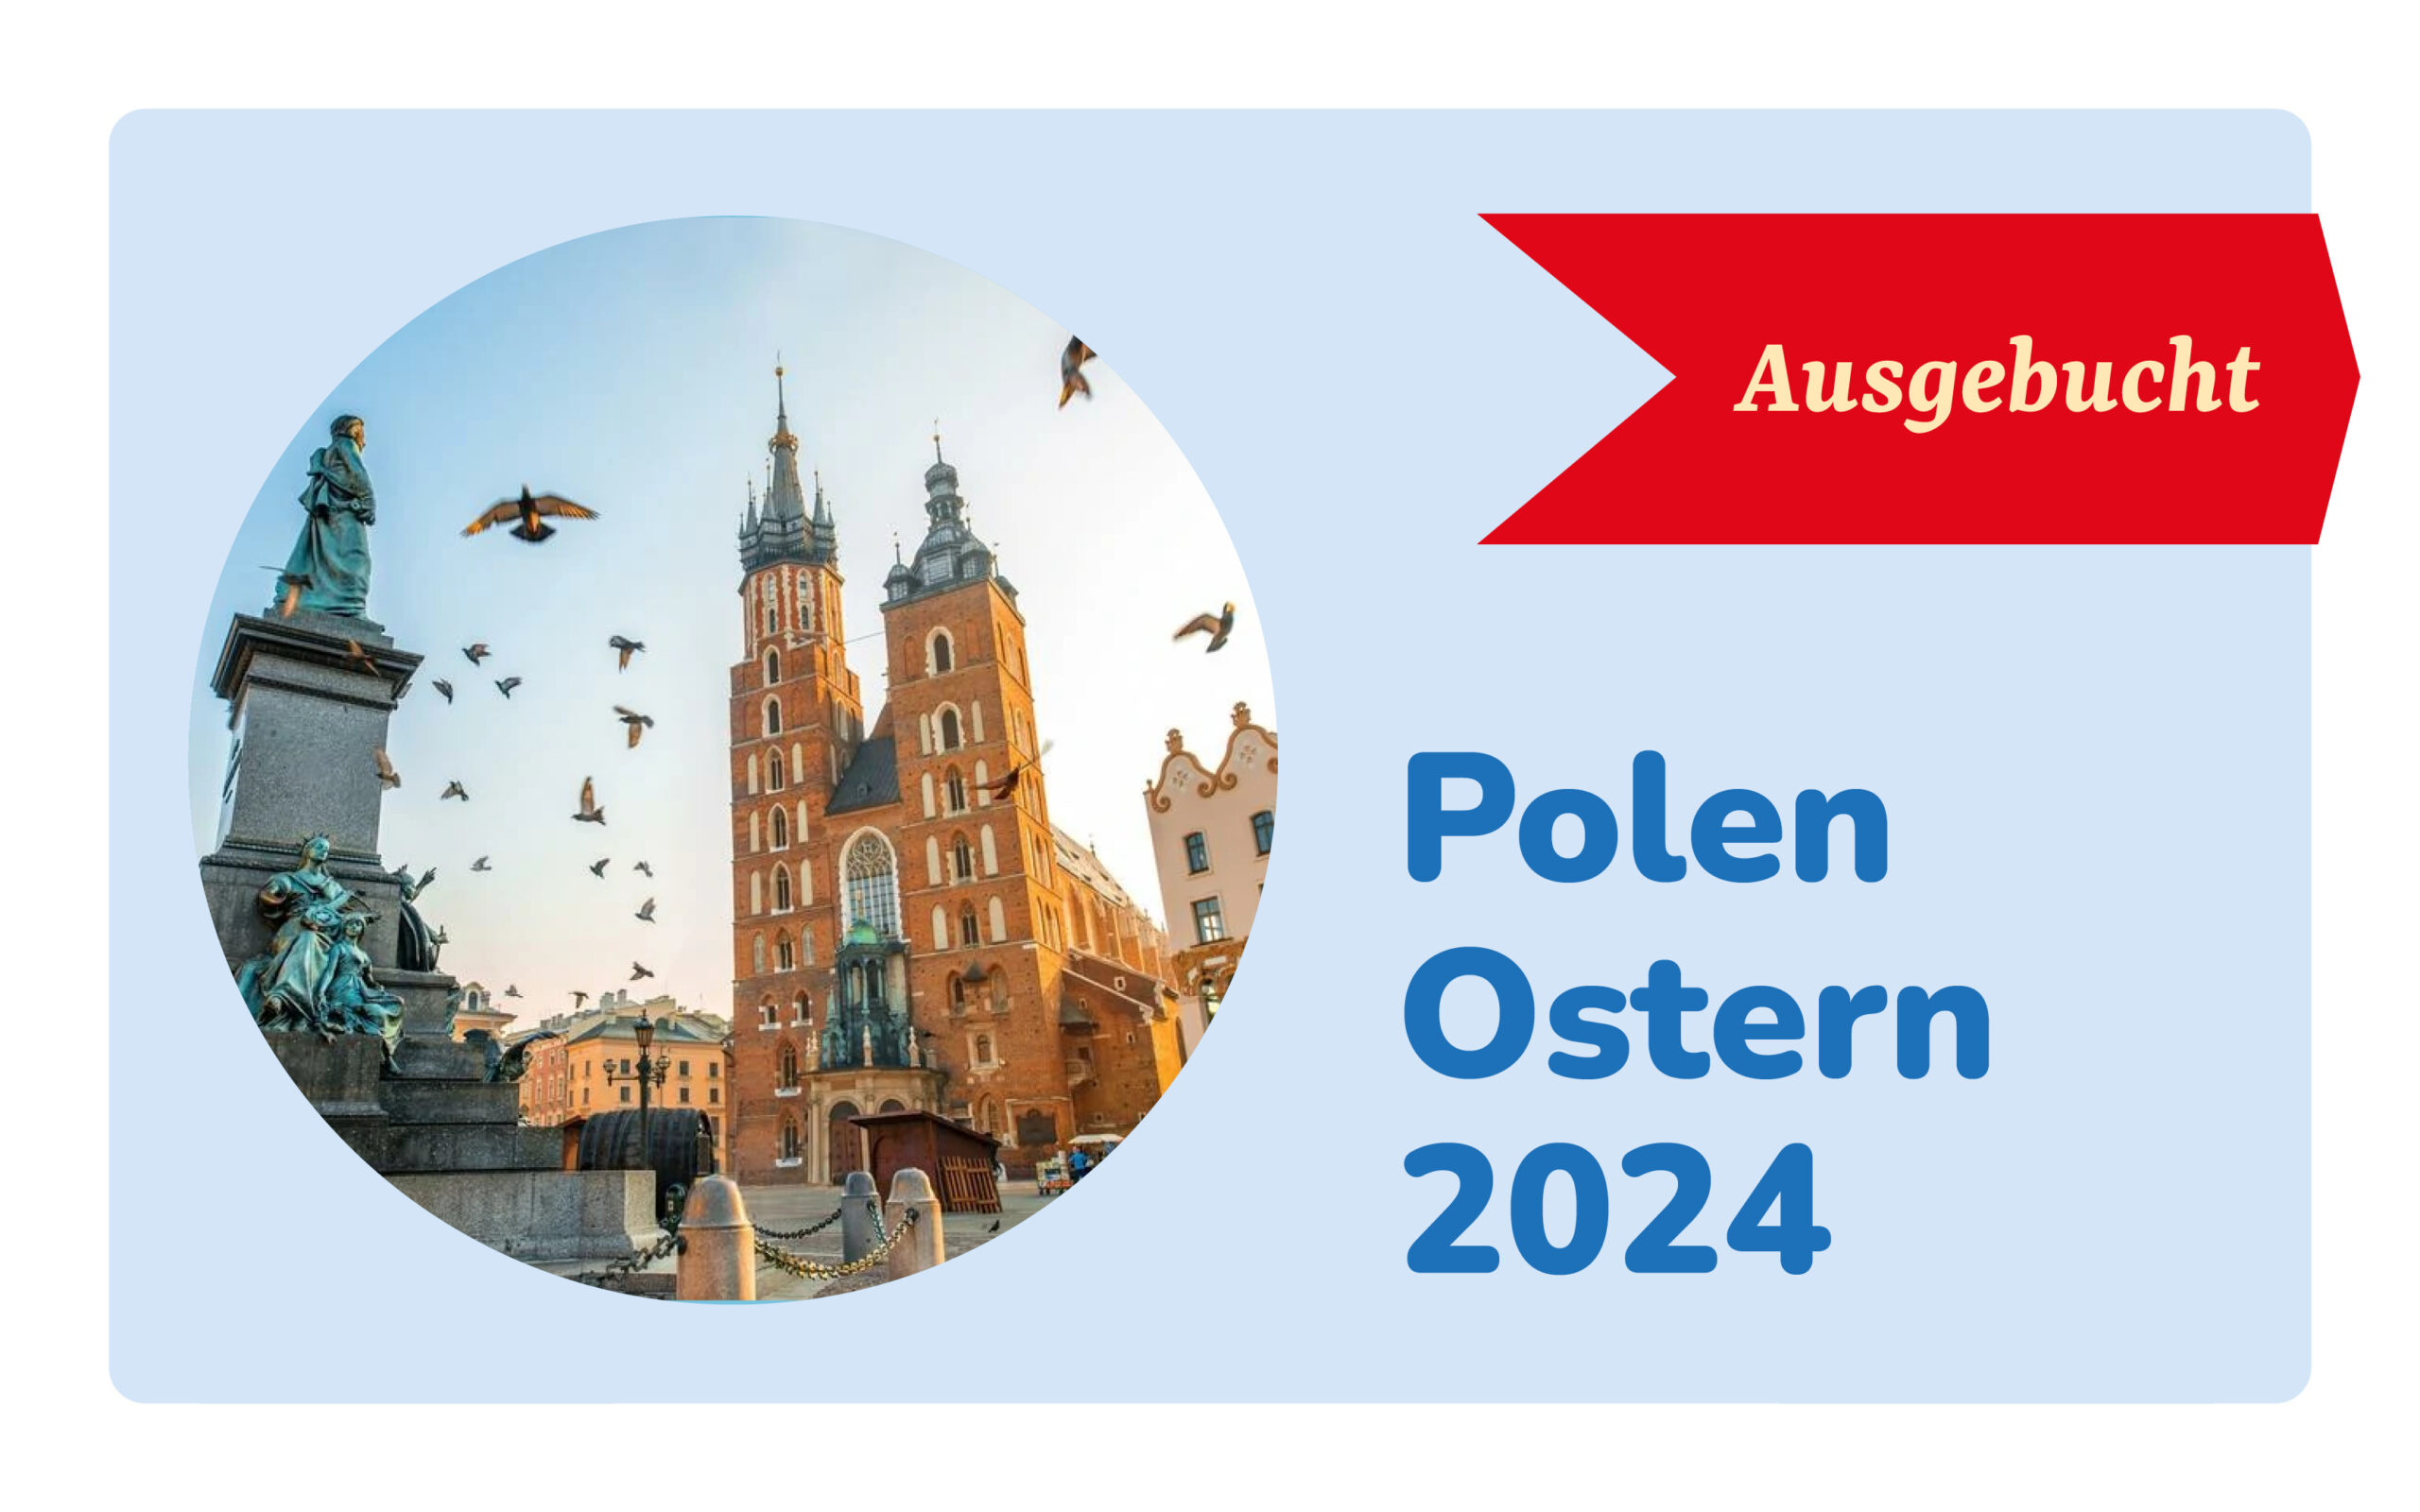 Polenreise an Ostern 2024